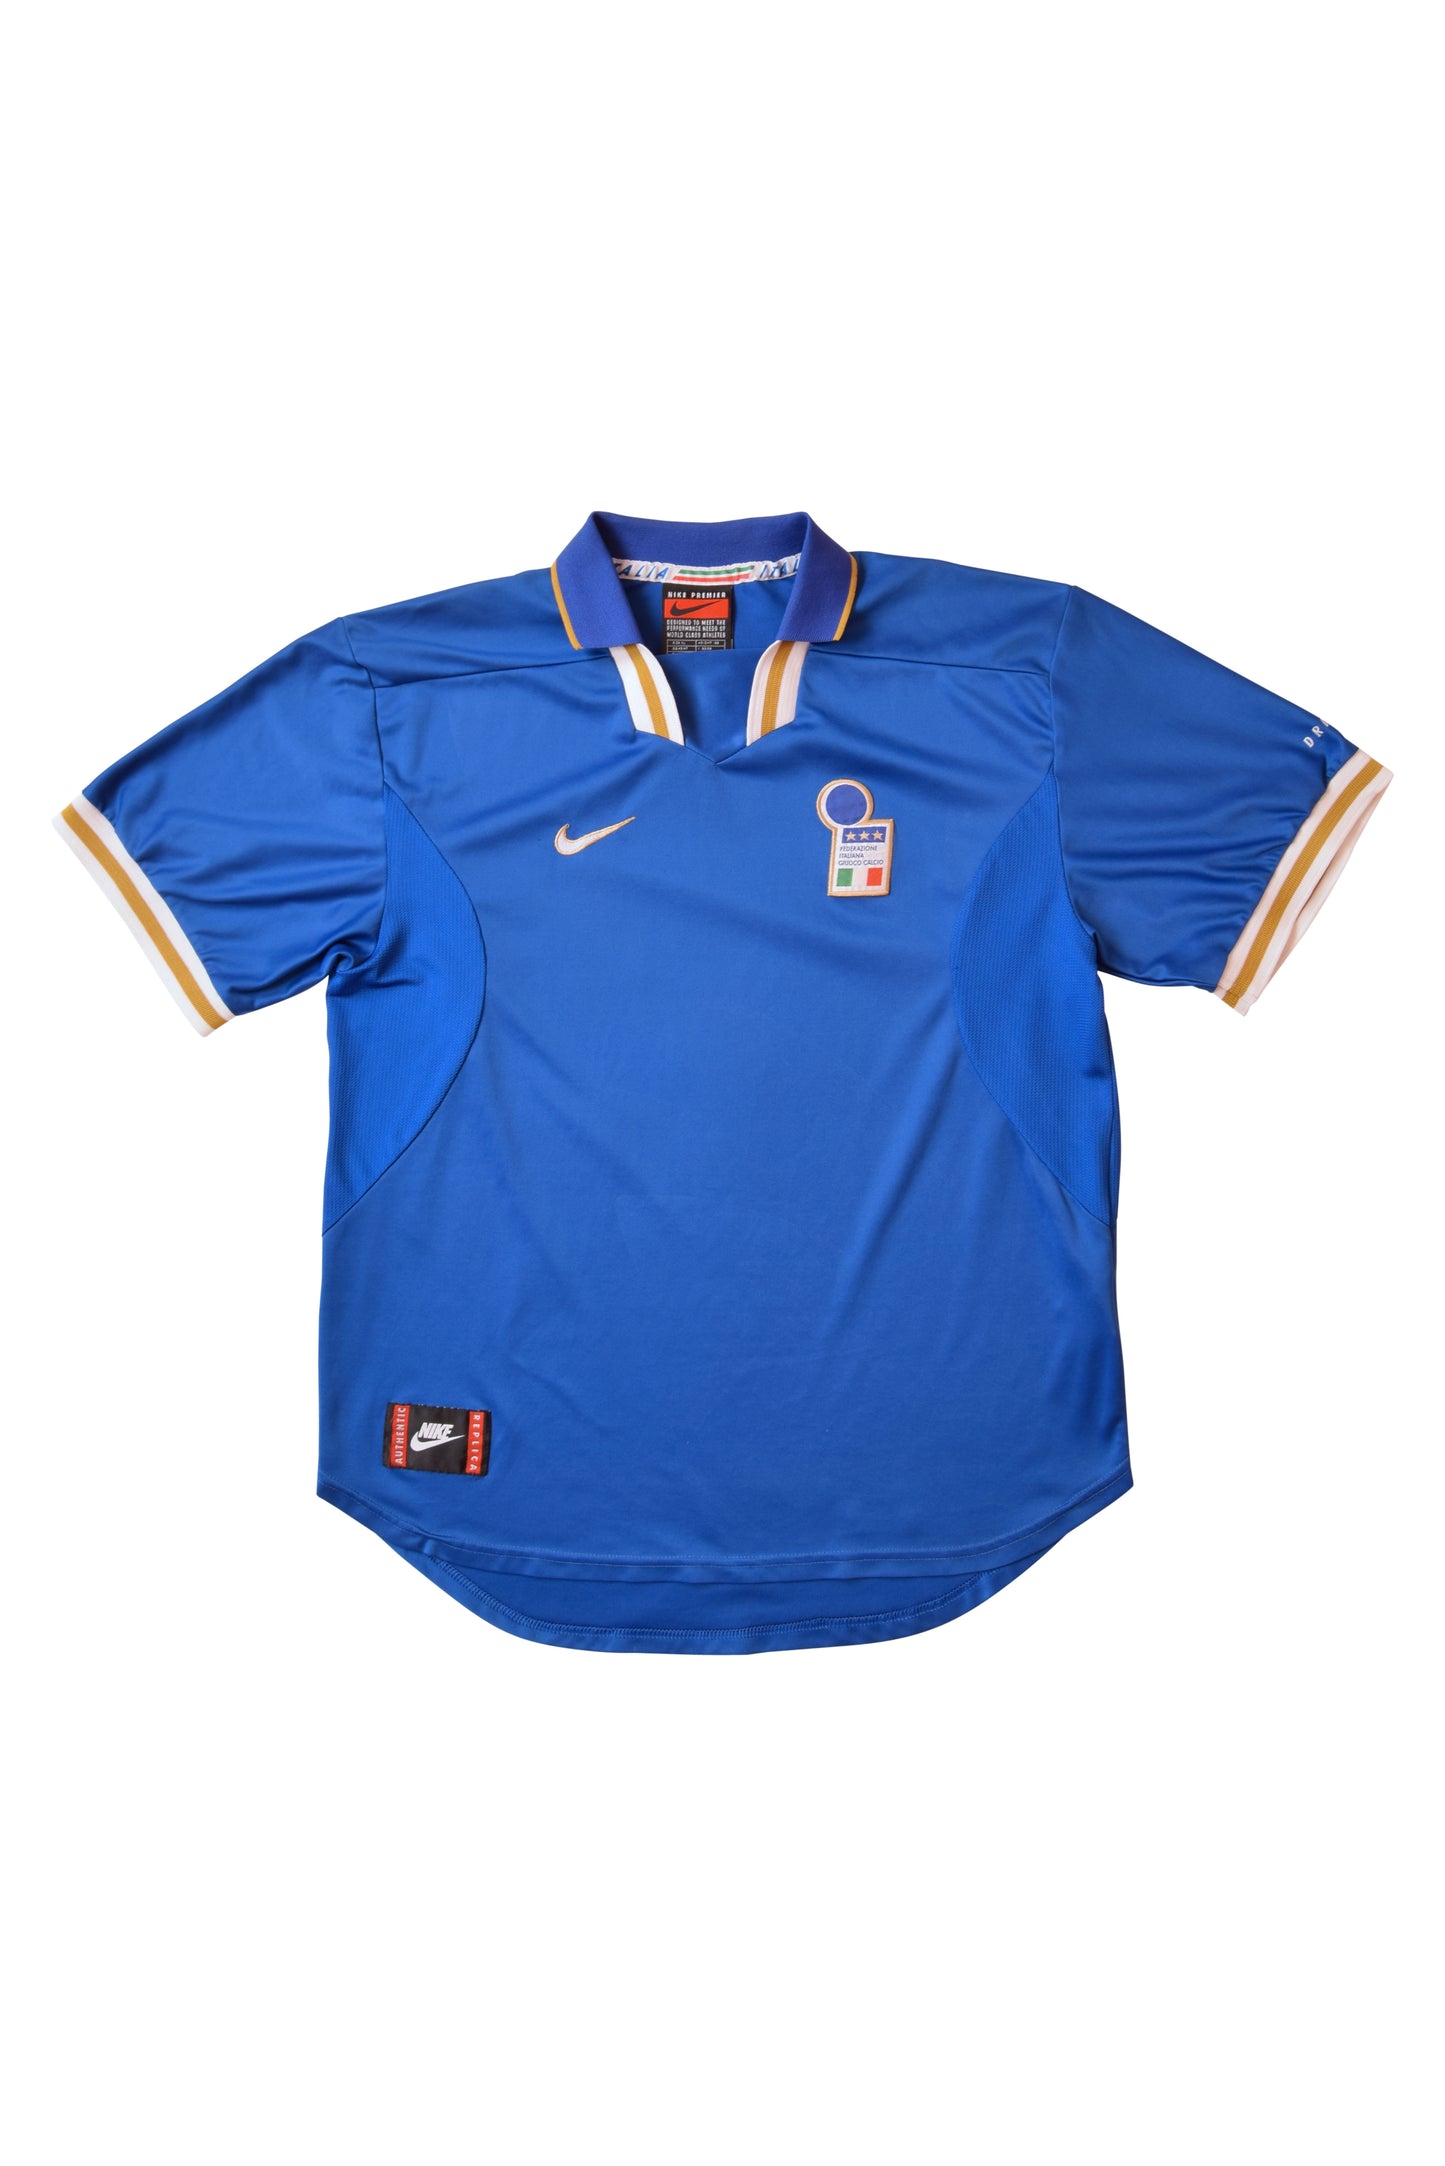 Vintage Italy 1996-1997 Nike Premier DRI FIT Home Football Shirt  Size M Euro 96 Blue